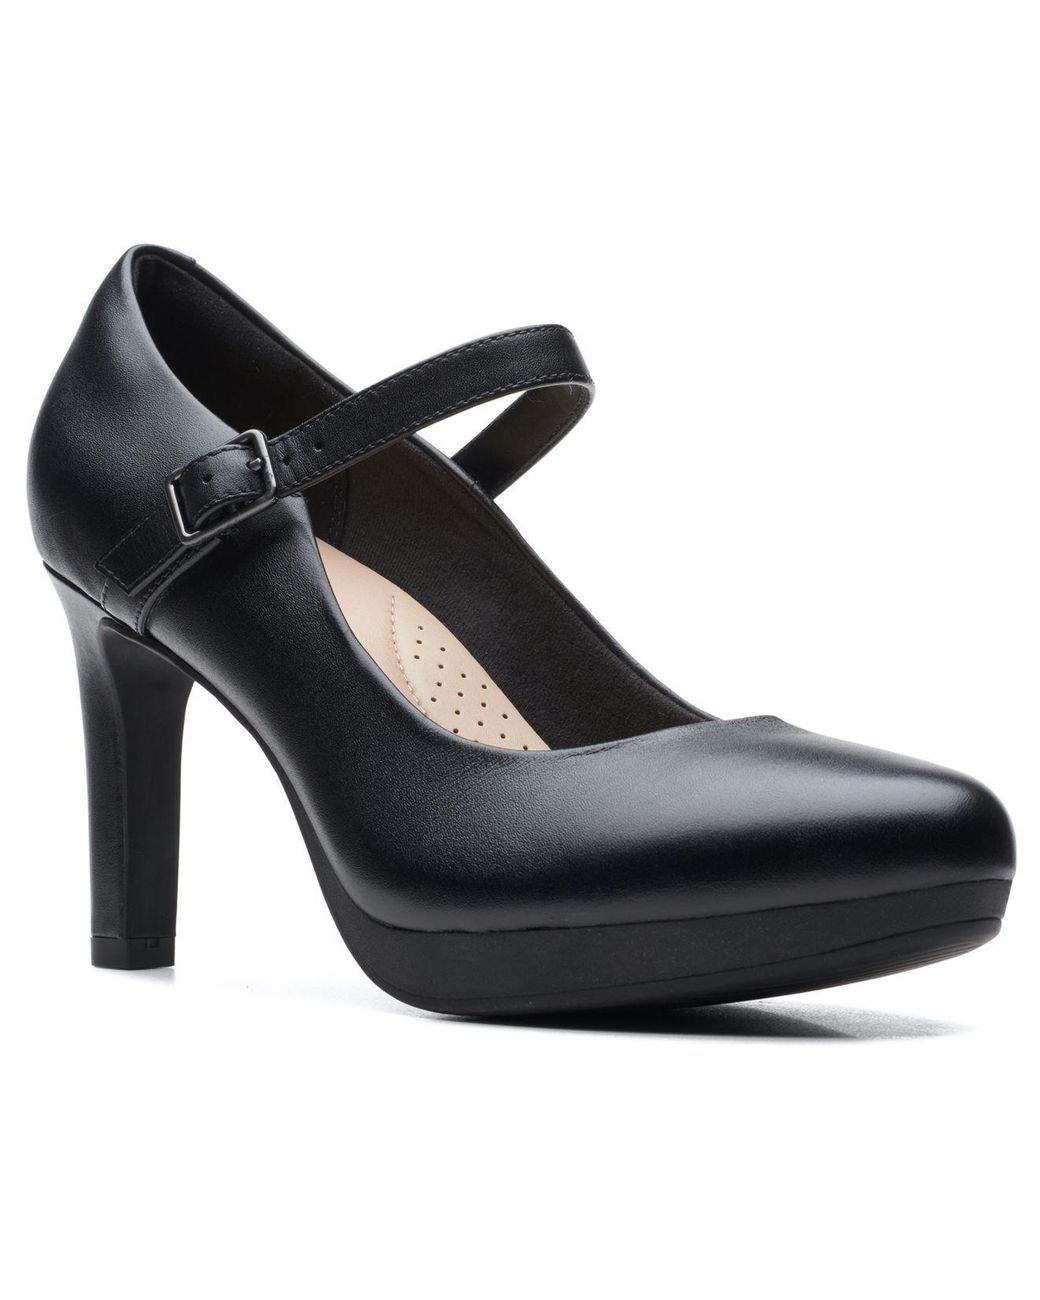 Clarks Leather Ambyr Shine Dress Shoes in Black Leather (Black) | Lyst